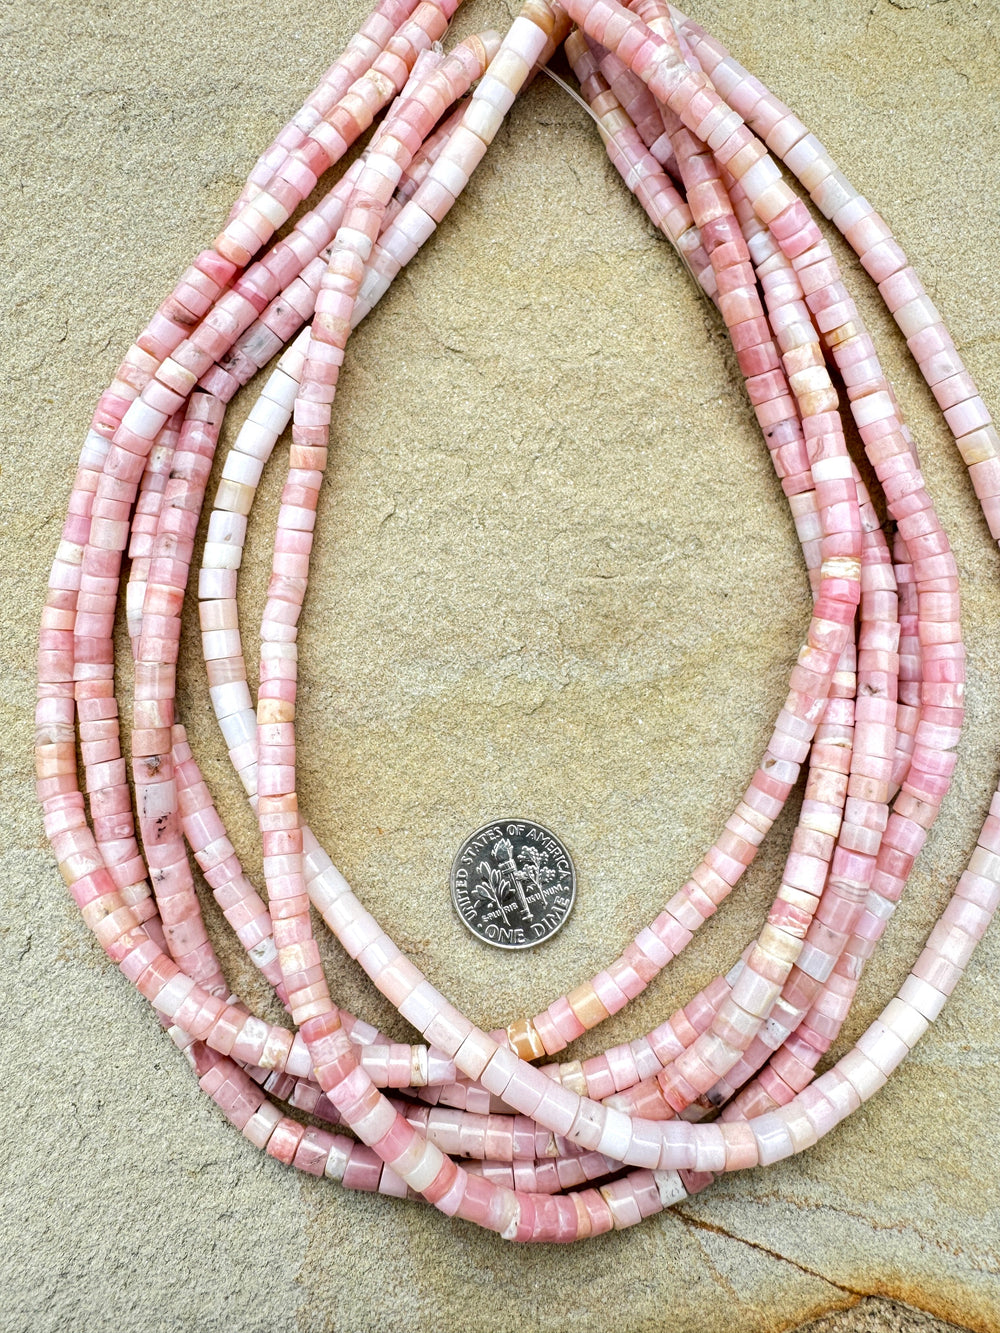 Peruvian Pink Opal 5mm Heishi Beads 16 inch strand